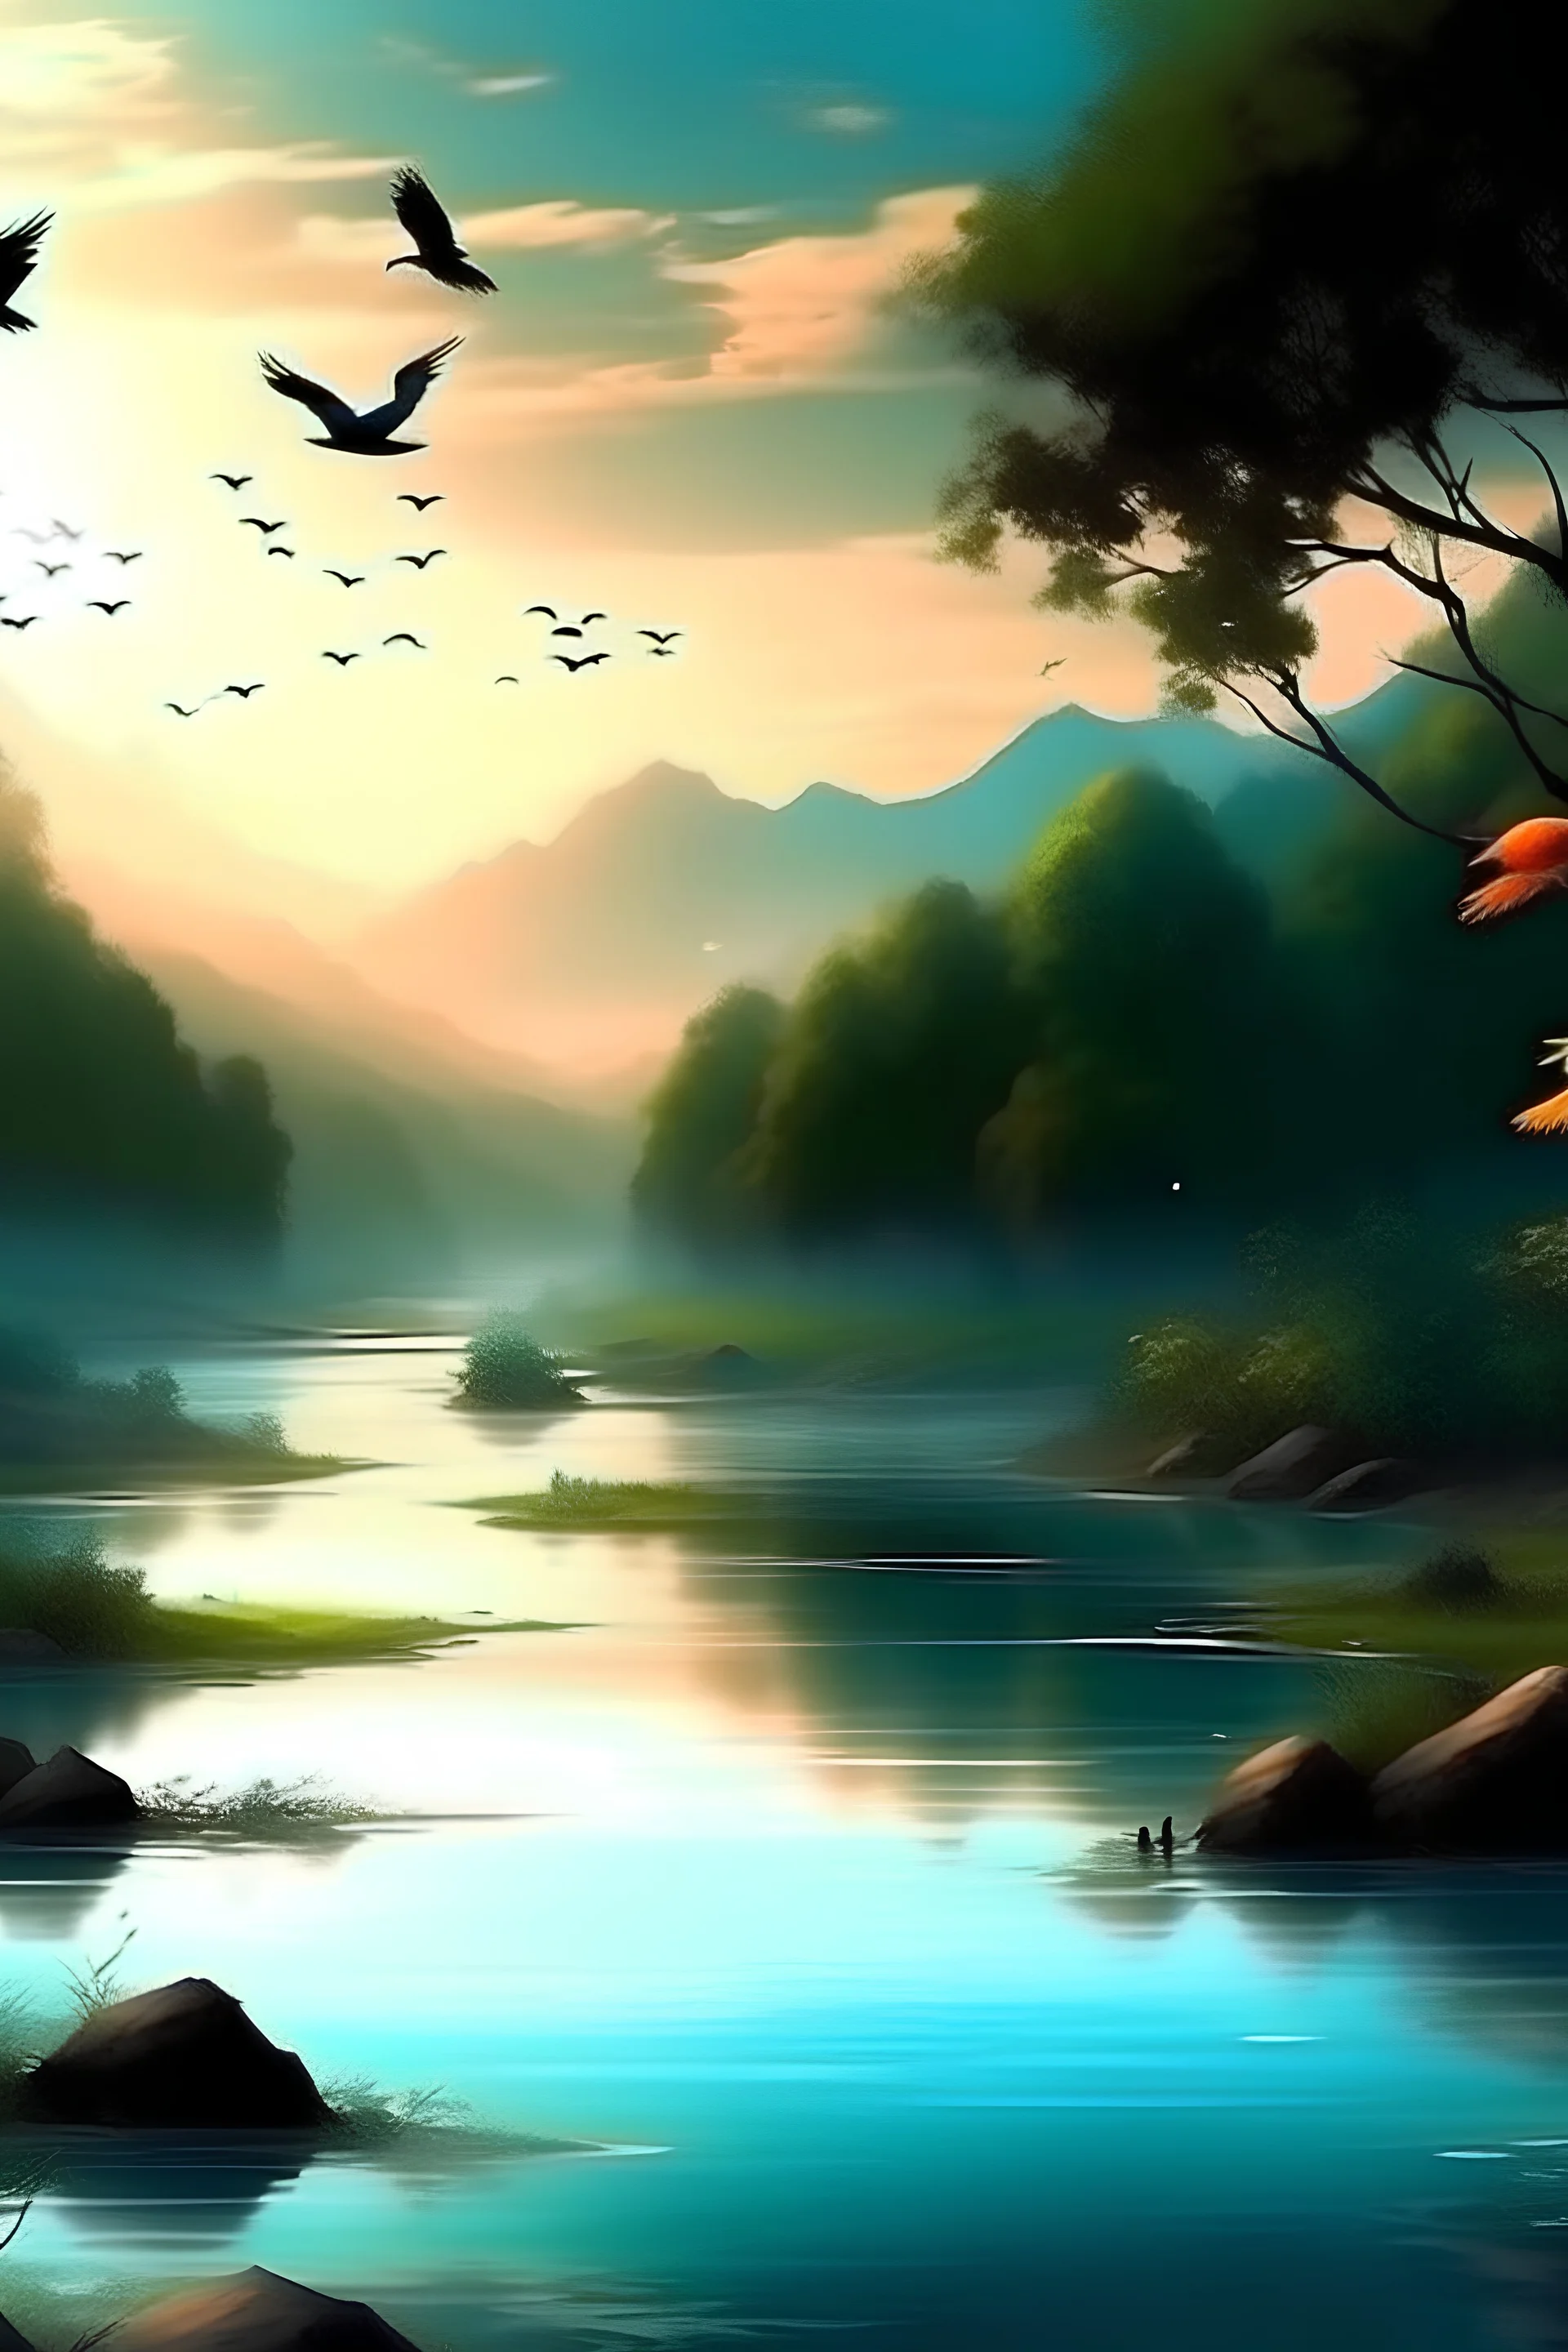 gambarkan pemandangan yang indah ada sungai yang mengalir dan burung yang terbang